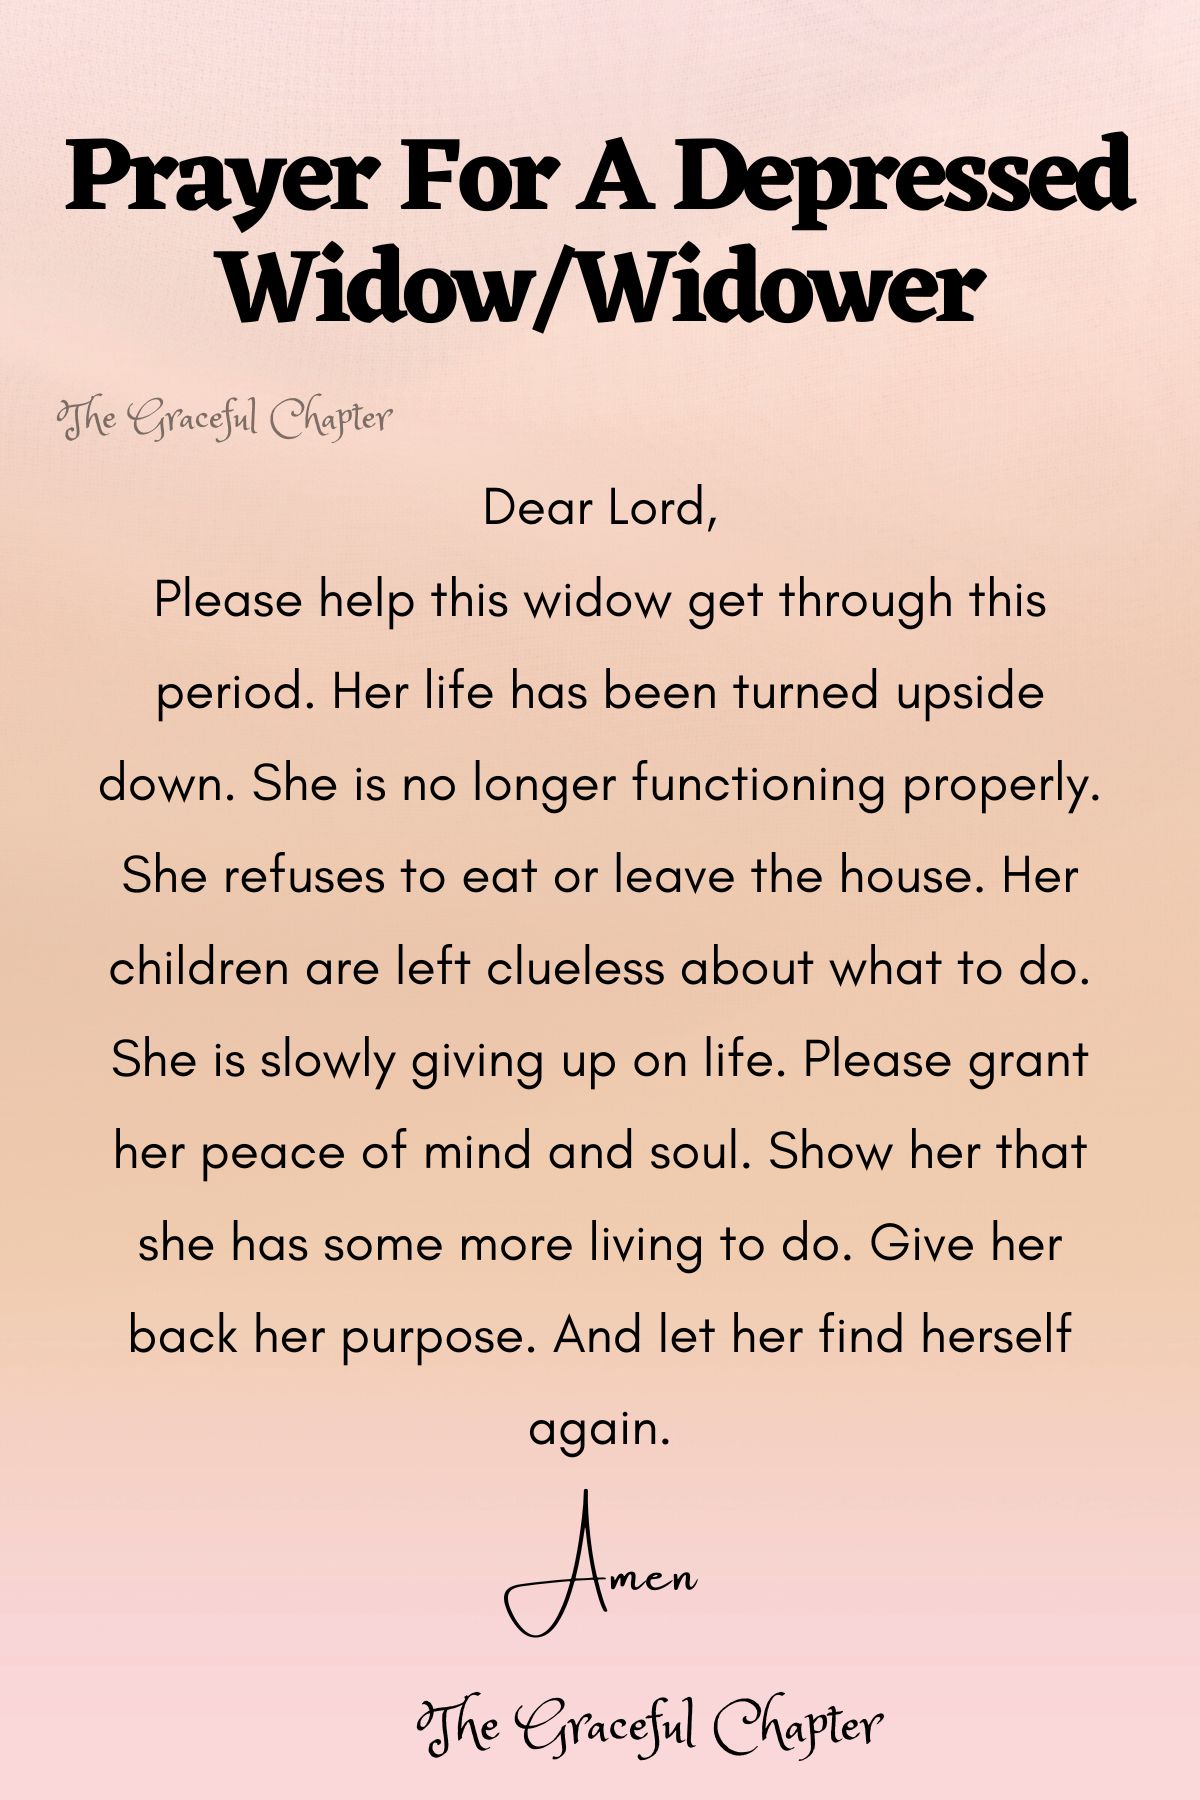 Prayer for a depressed widow/widower